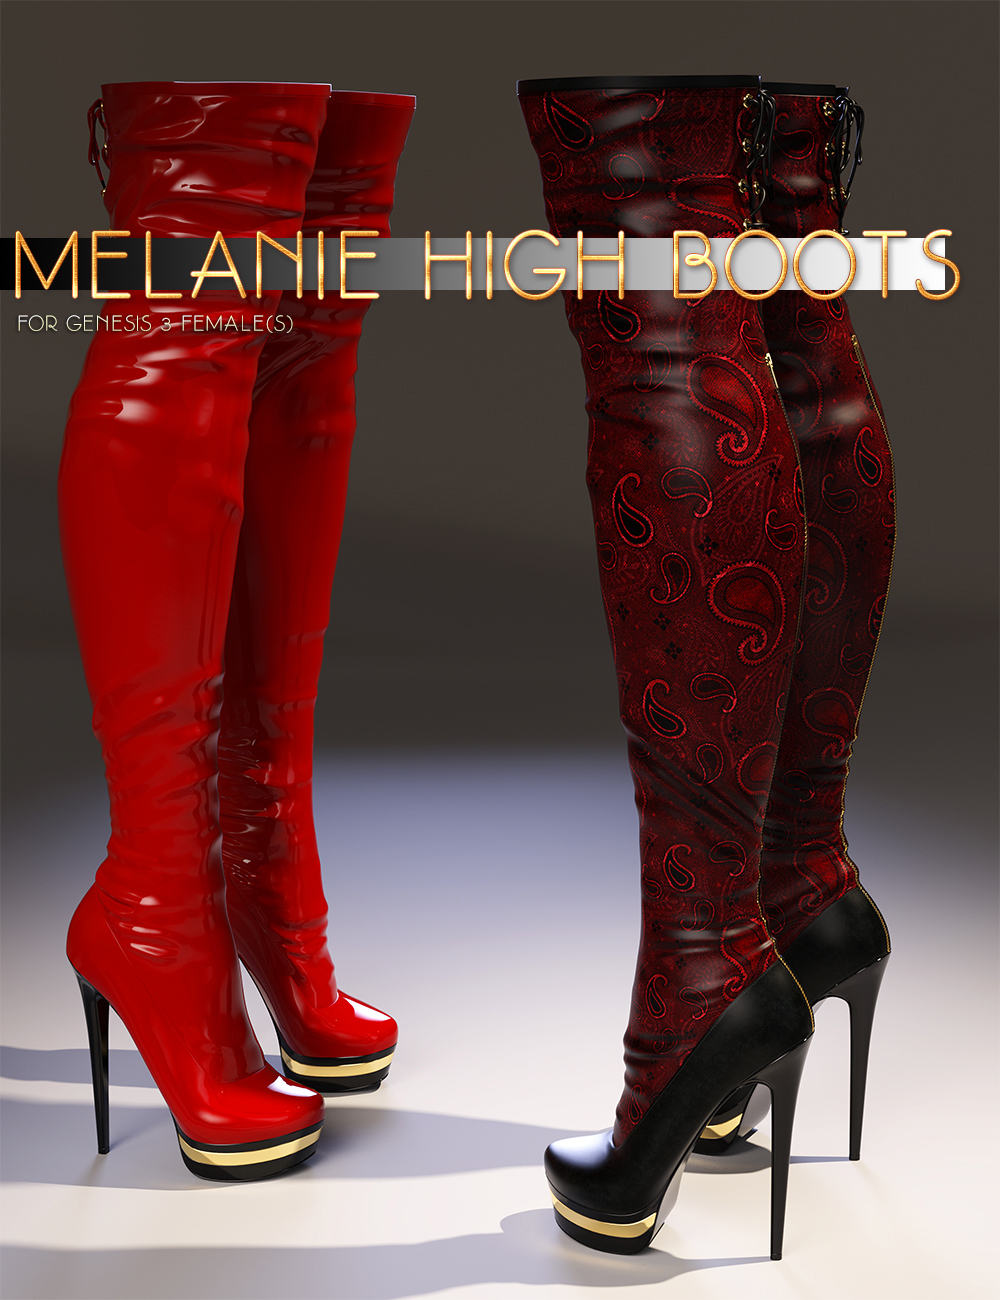 Melanie High Boots for Genesis 3 Female(s) by: 3DSublimeProductionsoutoftouchArryn, 3D Models by Daz 3D